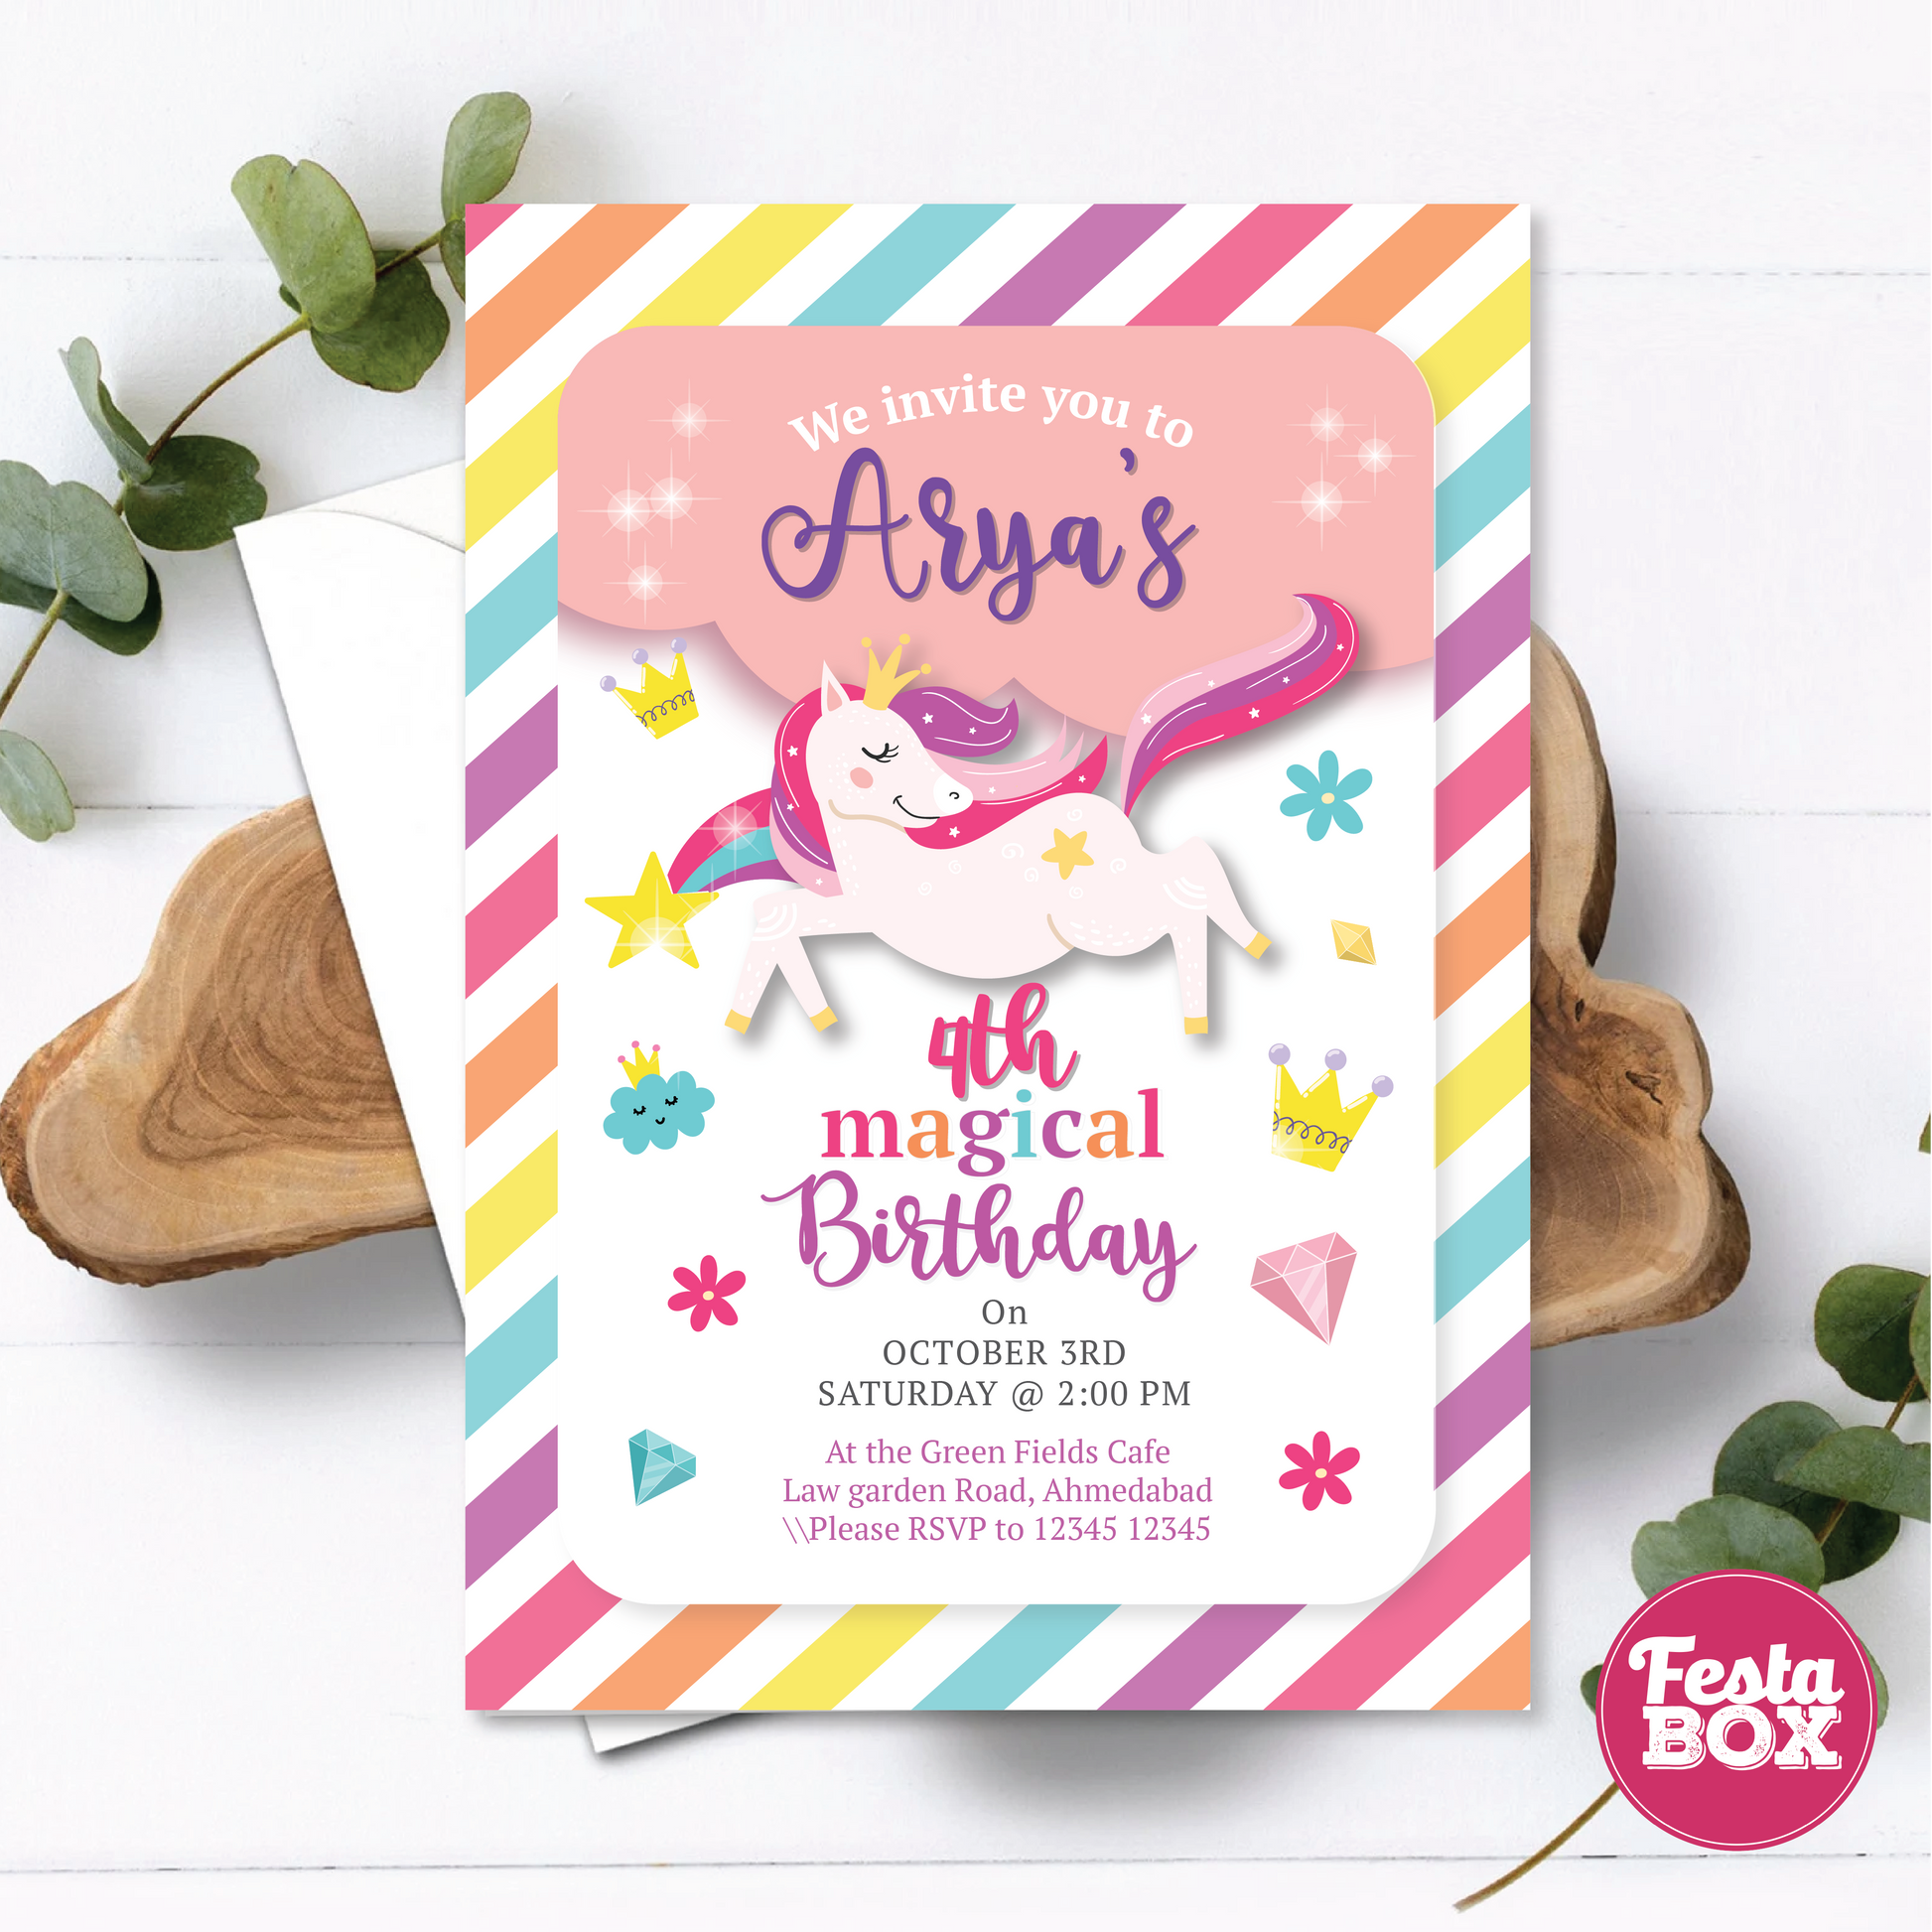 Birthday Invitation under the Unicorn Theme by Festabox for Birthday Party Decorations